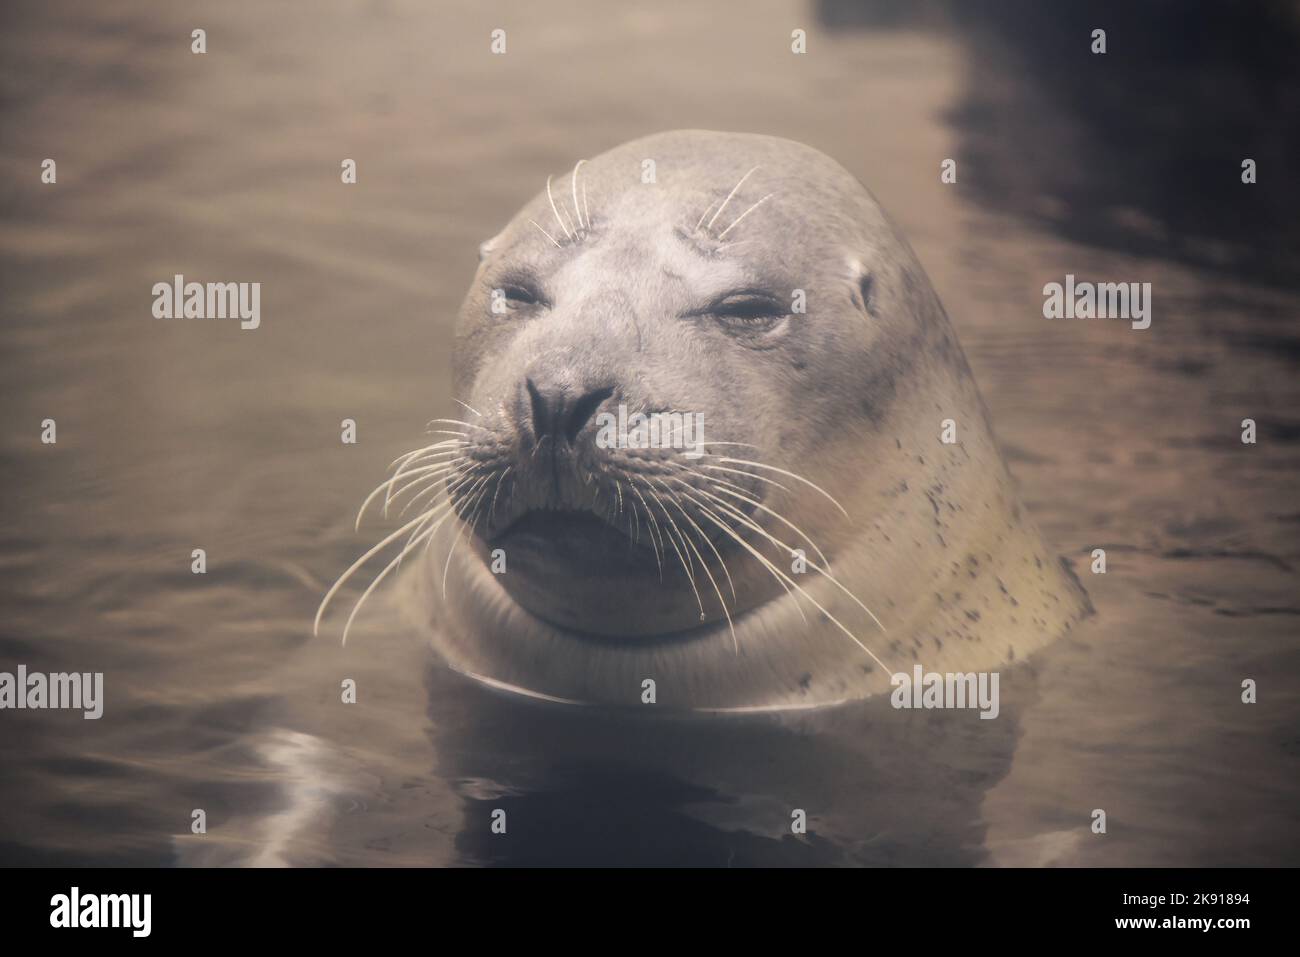 Grey harbour seal at Boston Aquarium, Boston, US Stock Photo